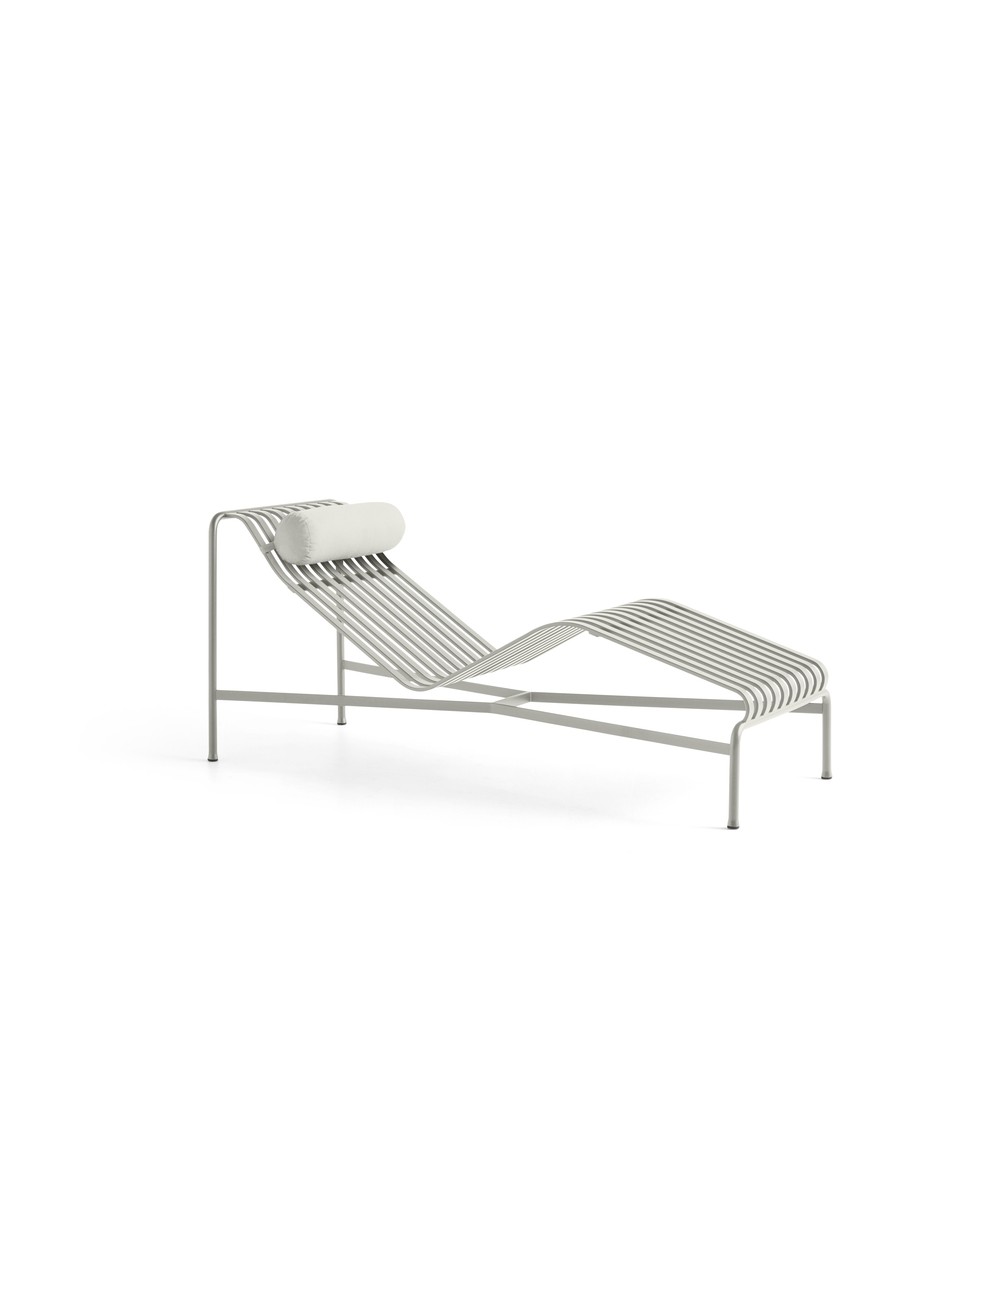 Palissade sun lounger headrest | Hay | Chic Cham | Lausanne